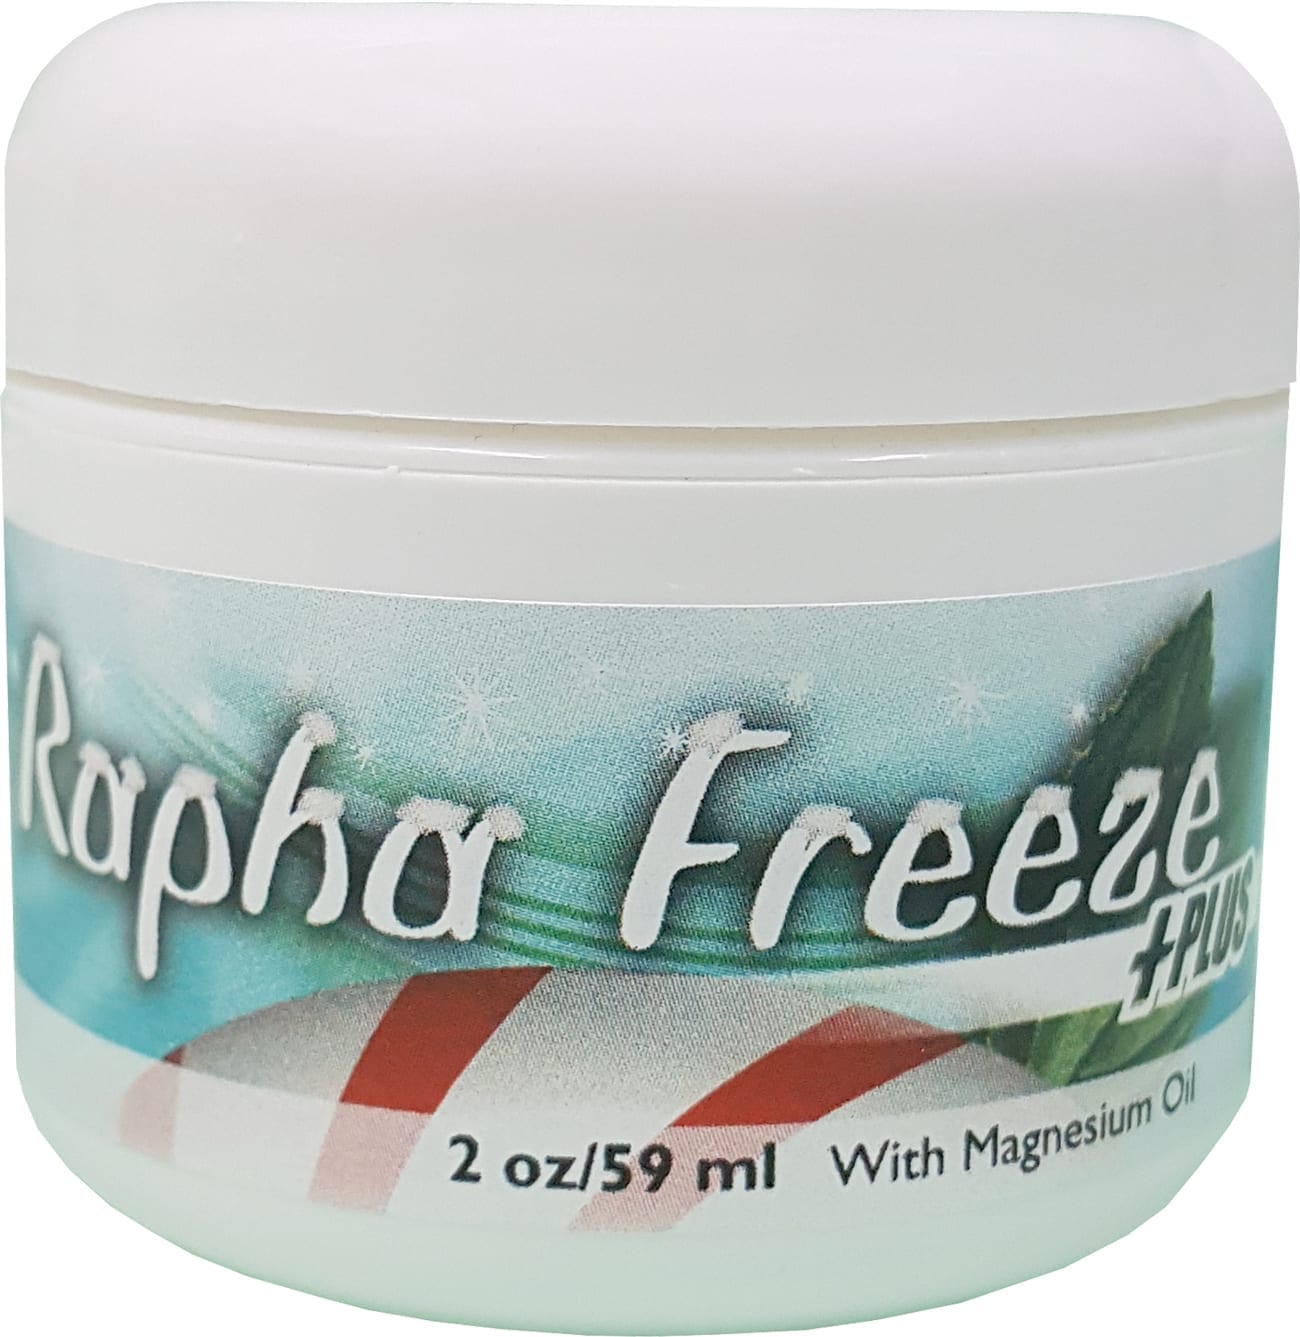 A jar of Rapha Freeze on a white background.